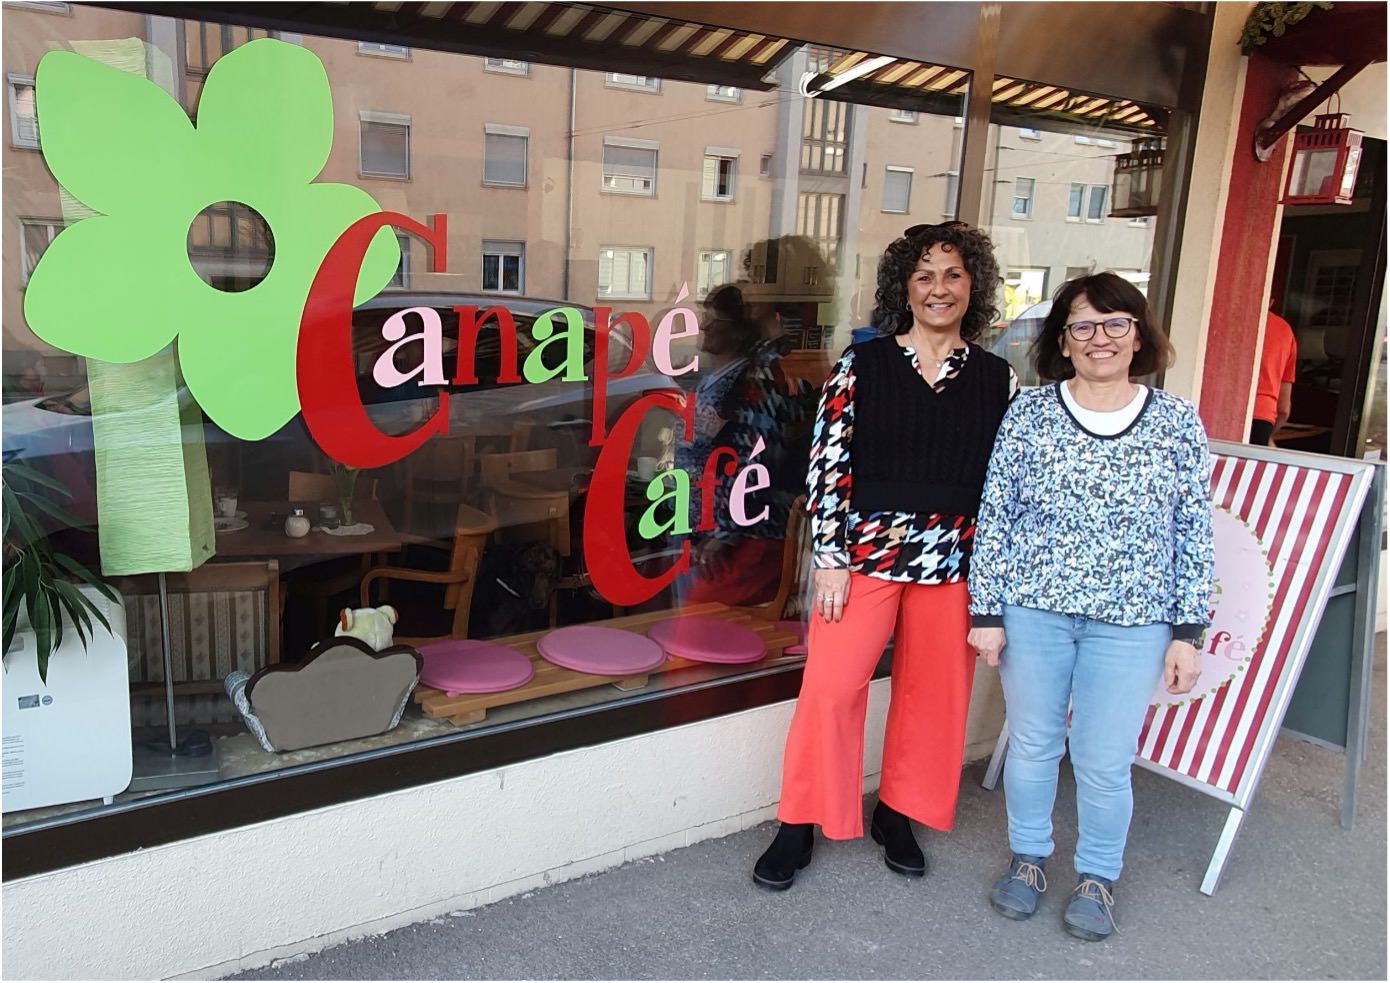 BIBUS unterstützt das Canapé Café in Ulm